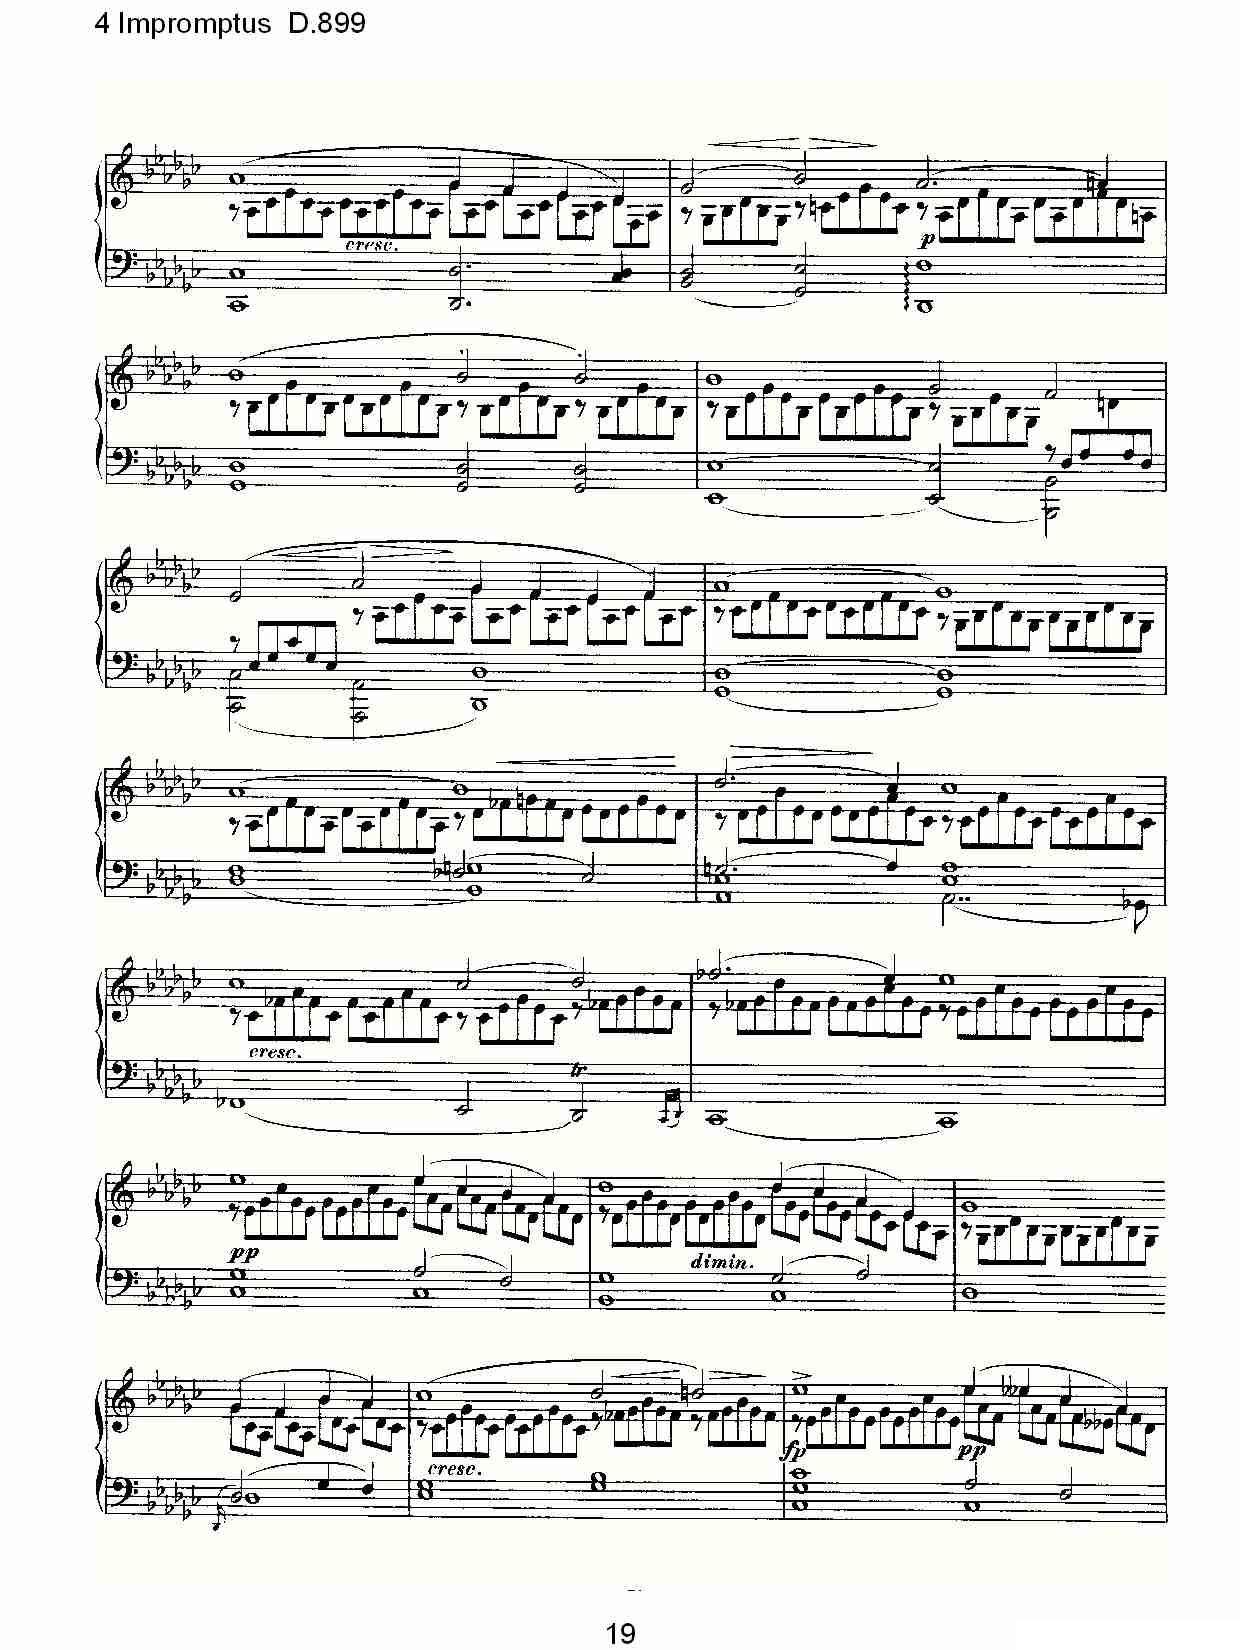 4 Impromptus D.899（4人即兴演奏 D.899）钢琴曲谱（图19）